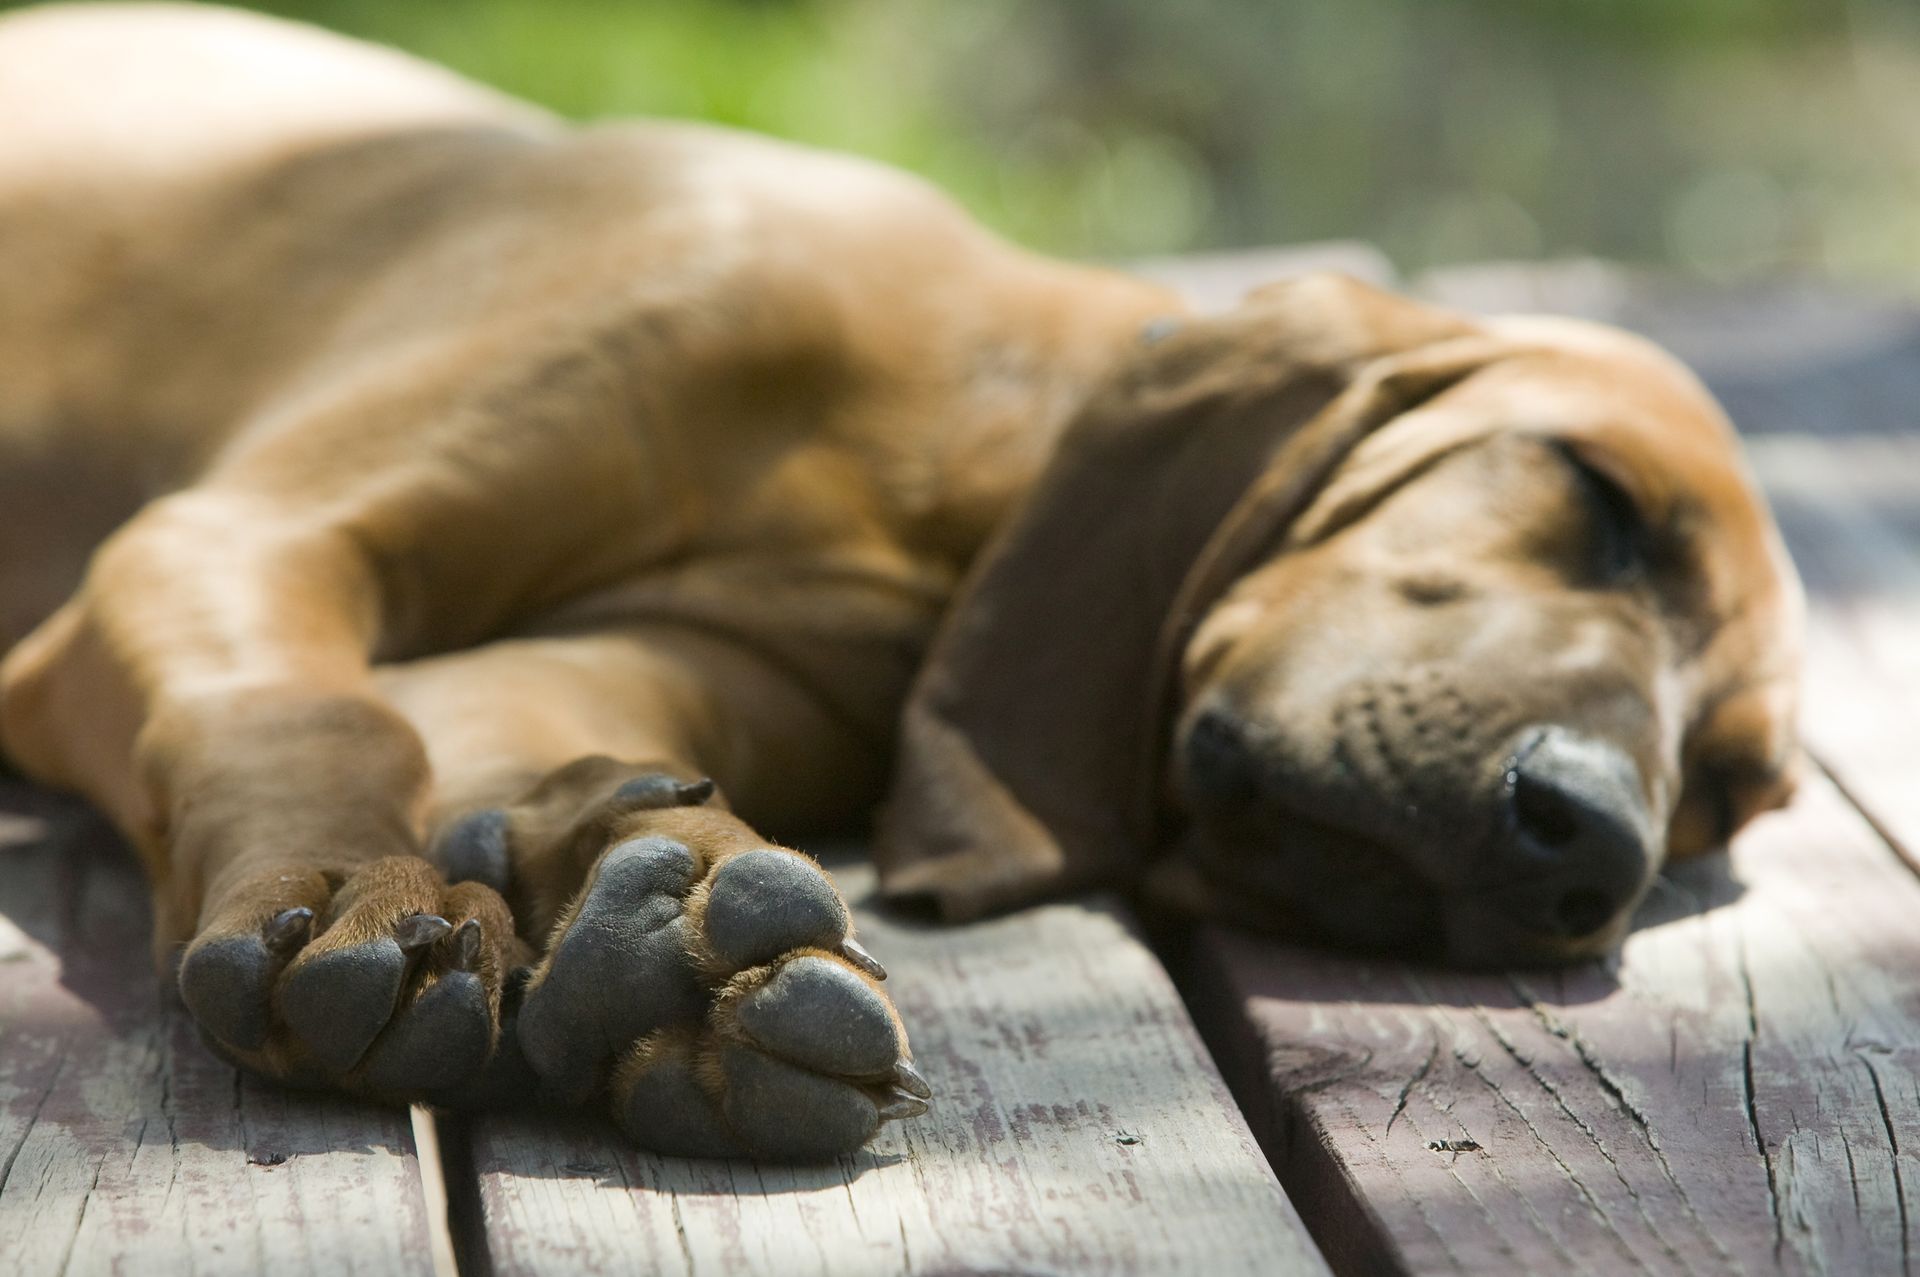 Do dogs die in their sleep?